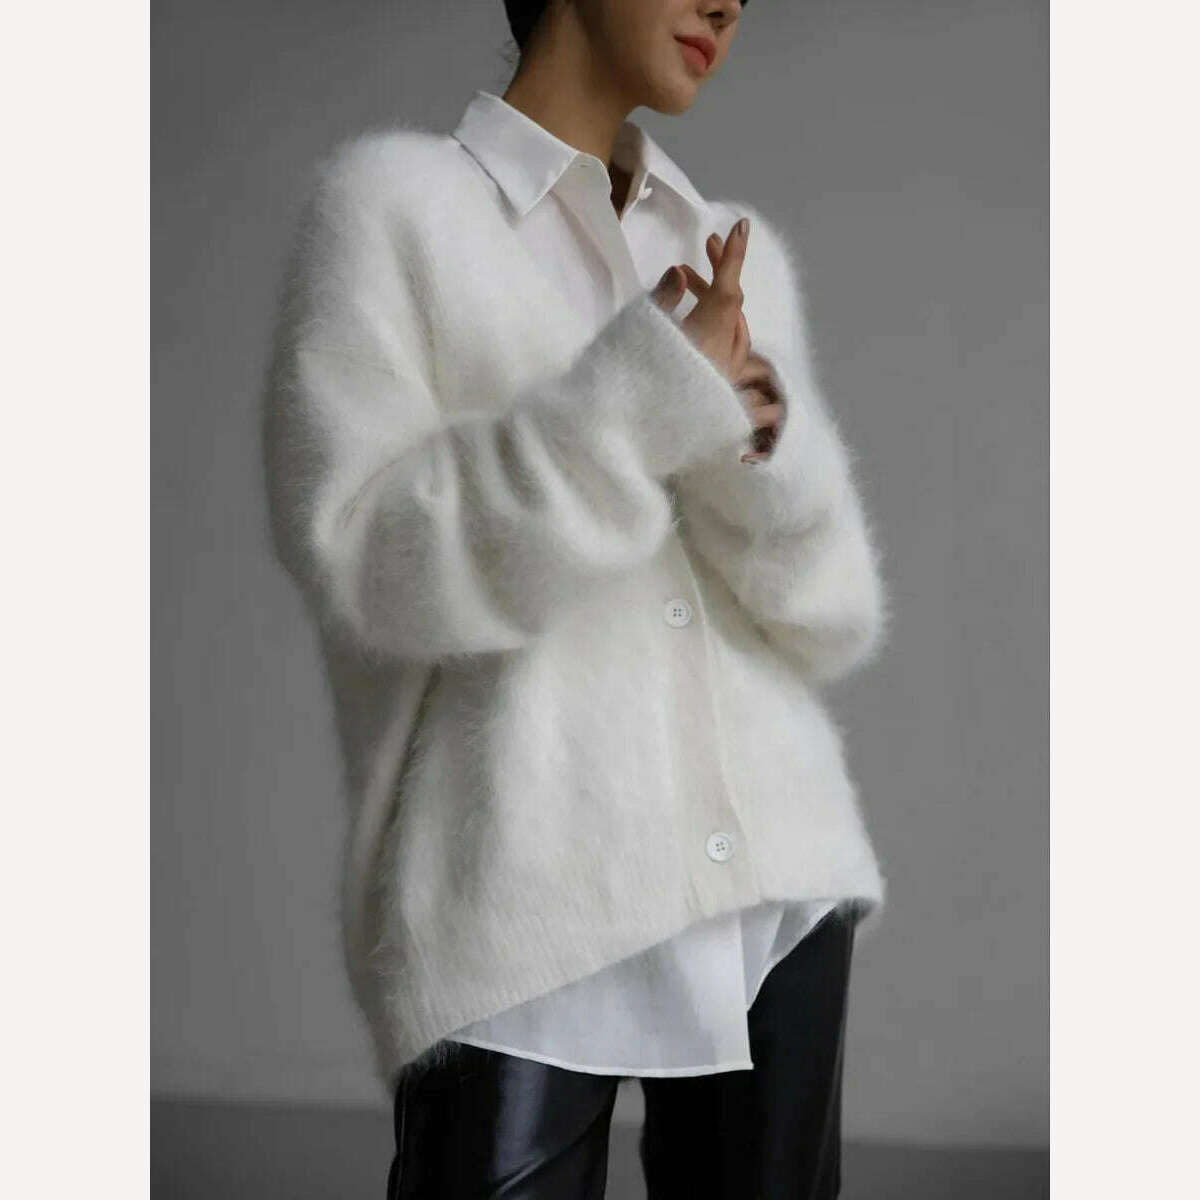 KIMLUD, Bornladies Women Imitation Mink Cardigan Soft V-neck Thiick Knitted Jacket Winter Button Vintage Cardigan Sweater for Women, WHITE / S, KIMLUD Women's Clothes